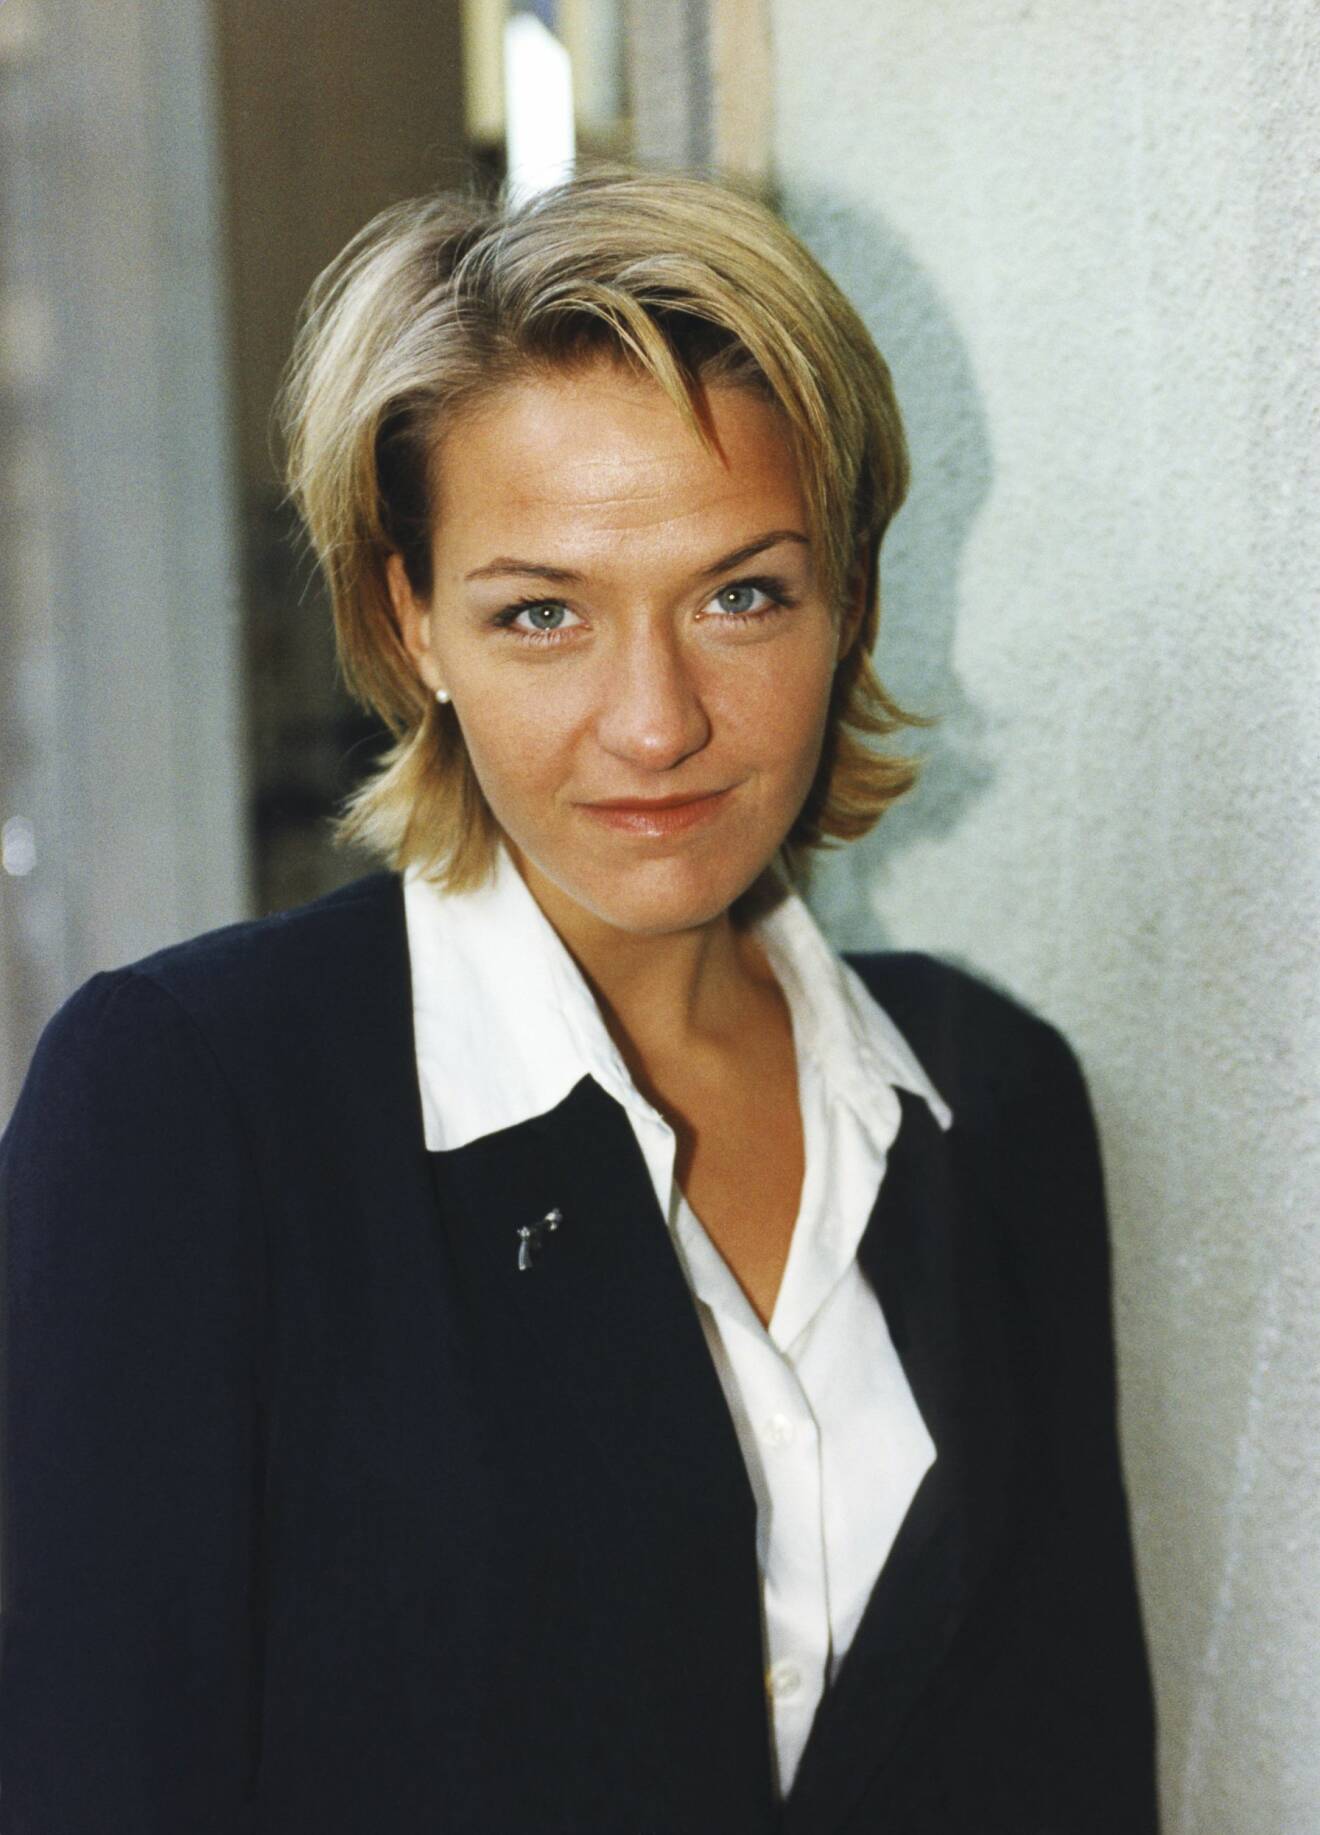 Kristin vann Hylandpriset år 1993